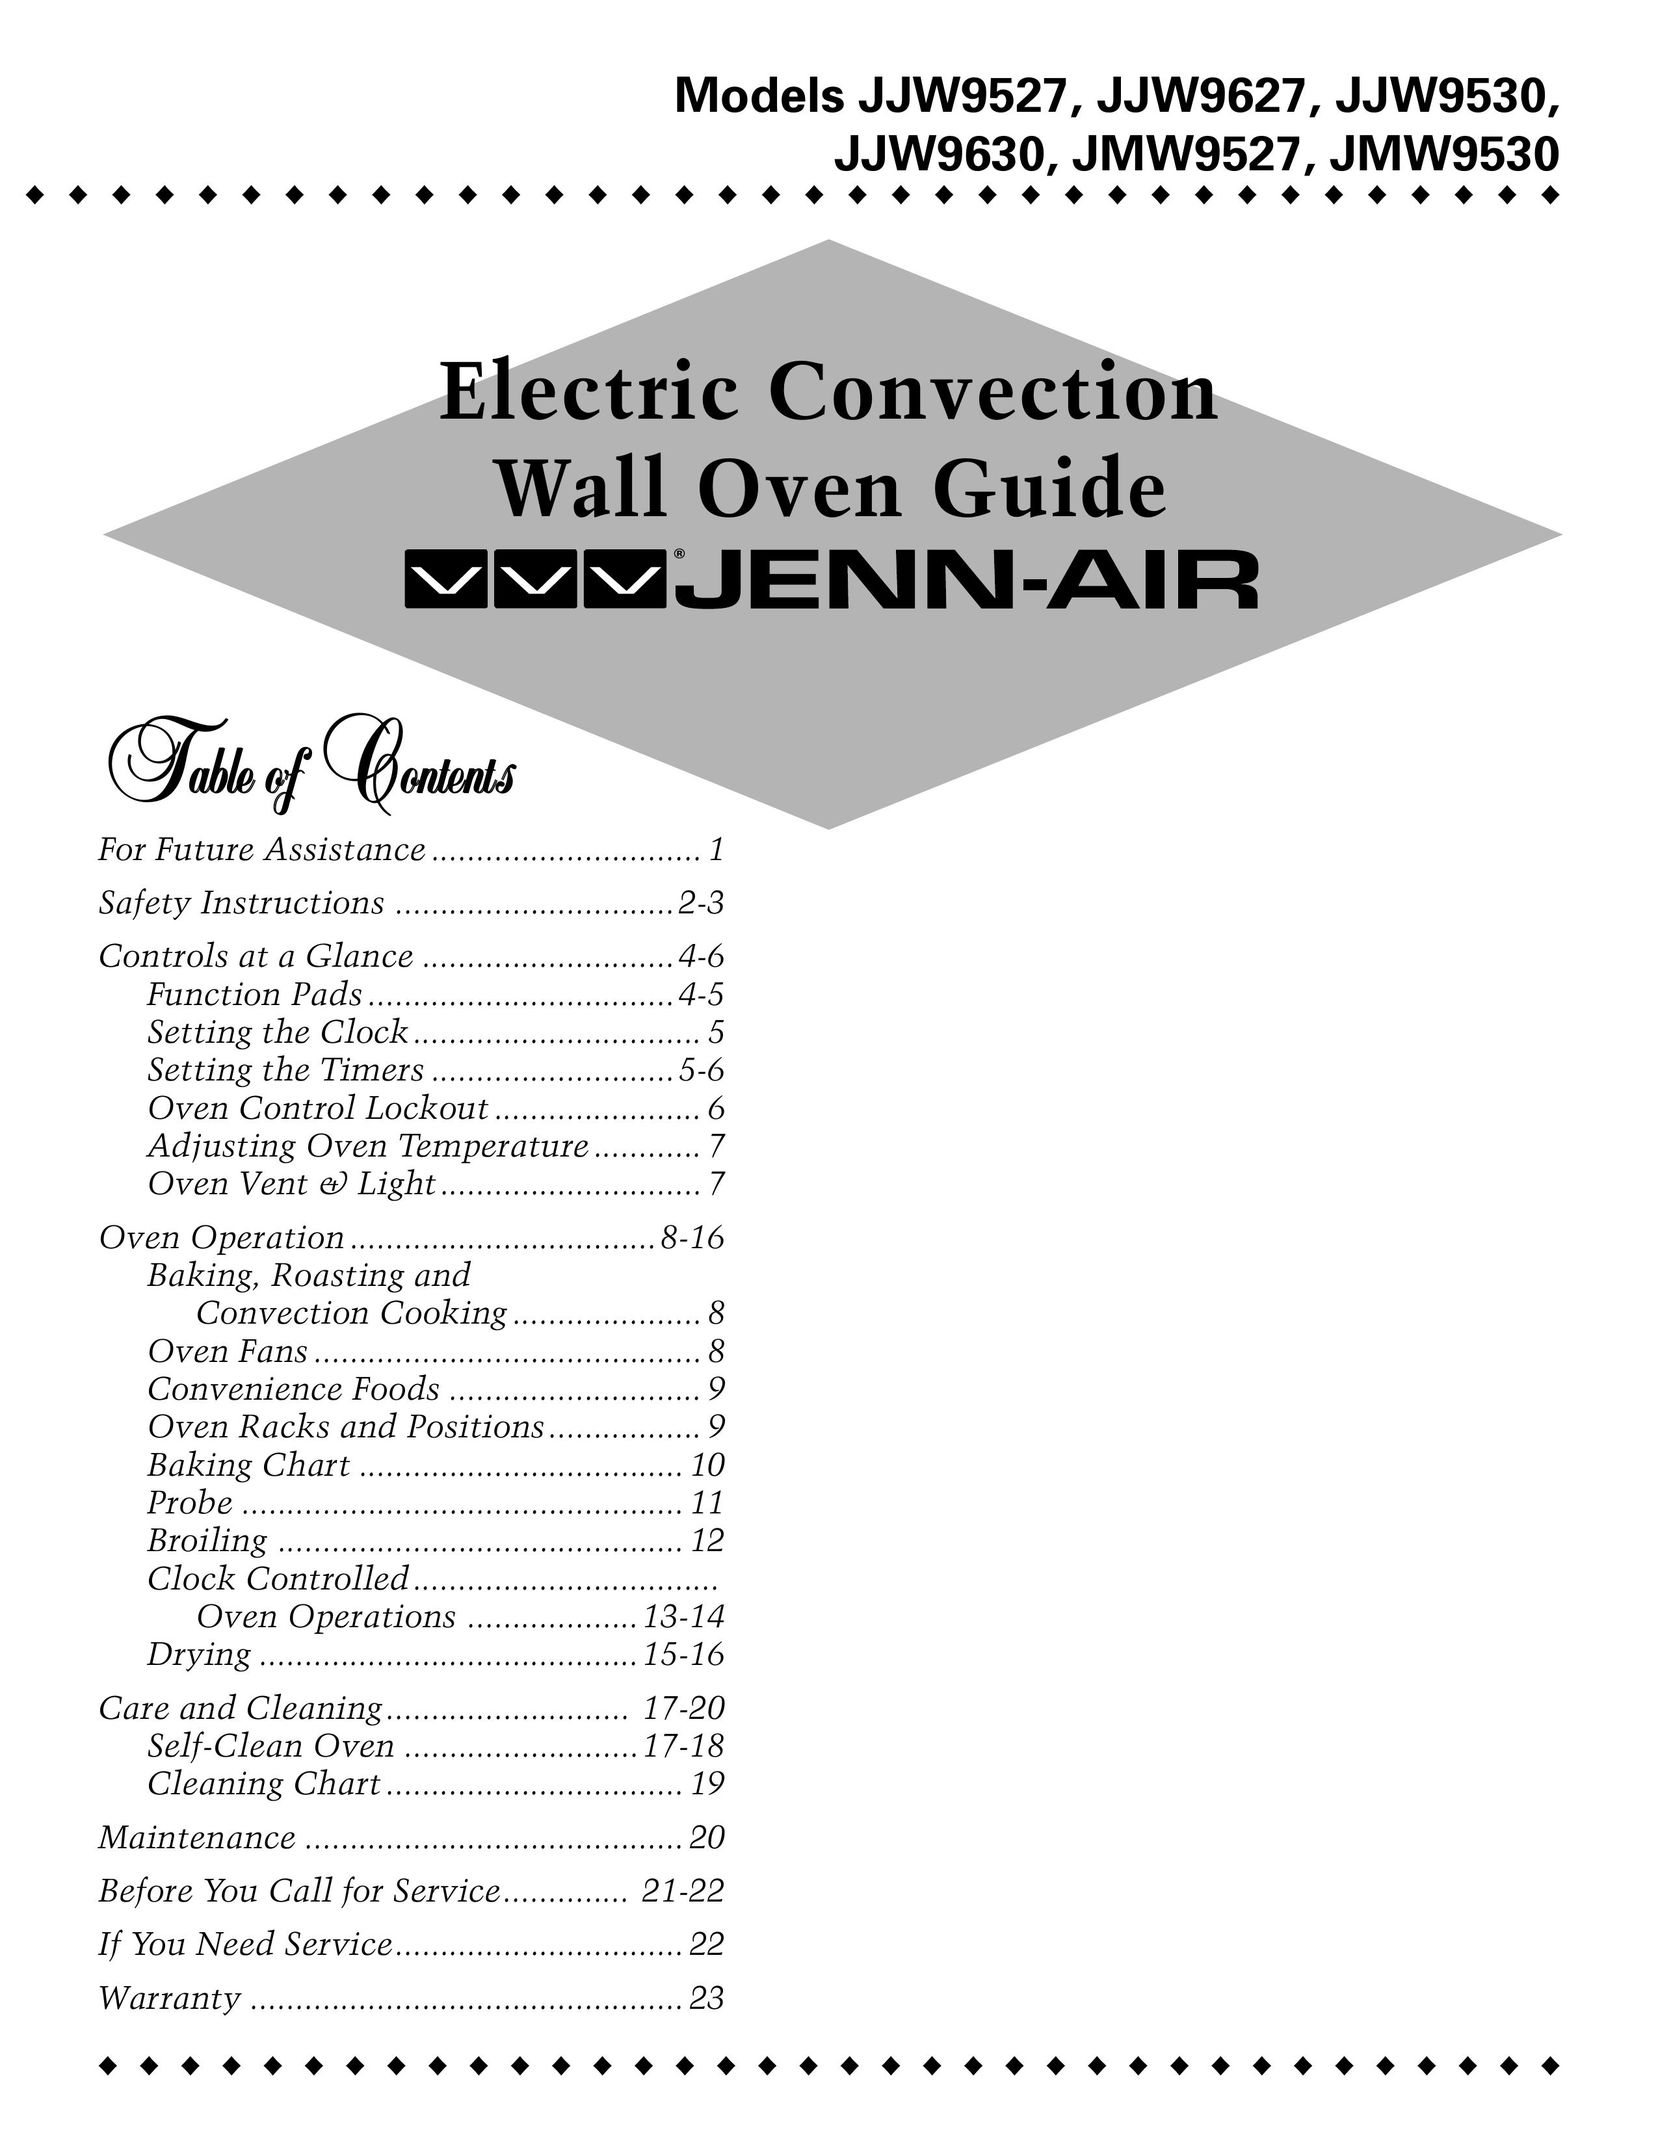 Jenn-Air JJW9630 Convection Oven User Manual